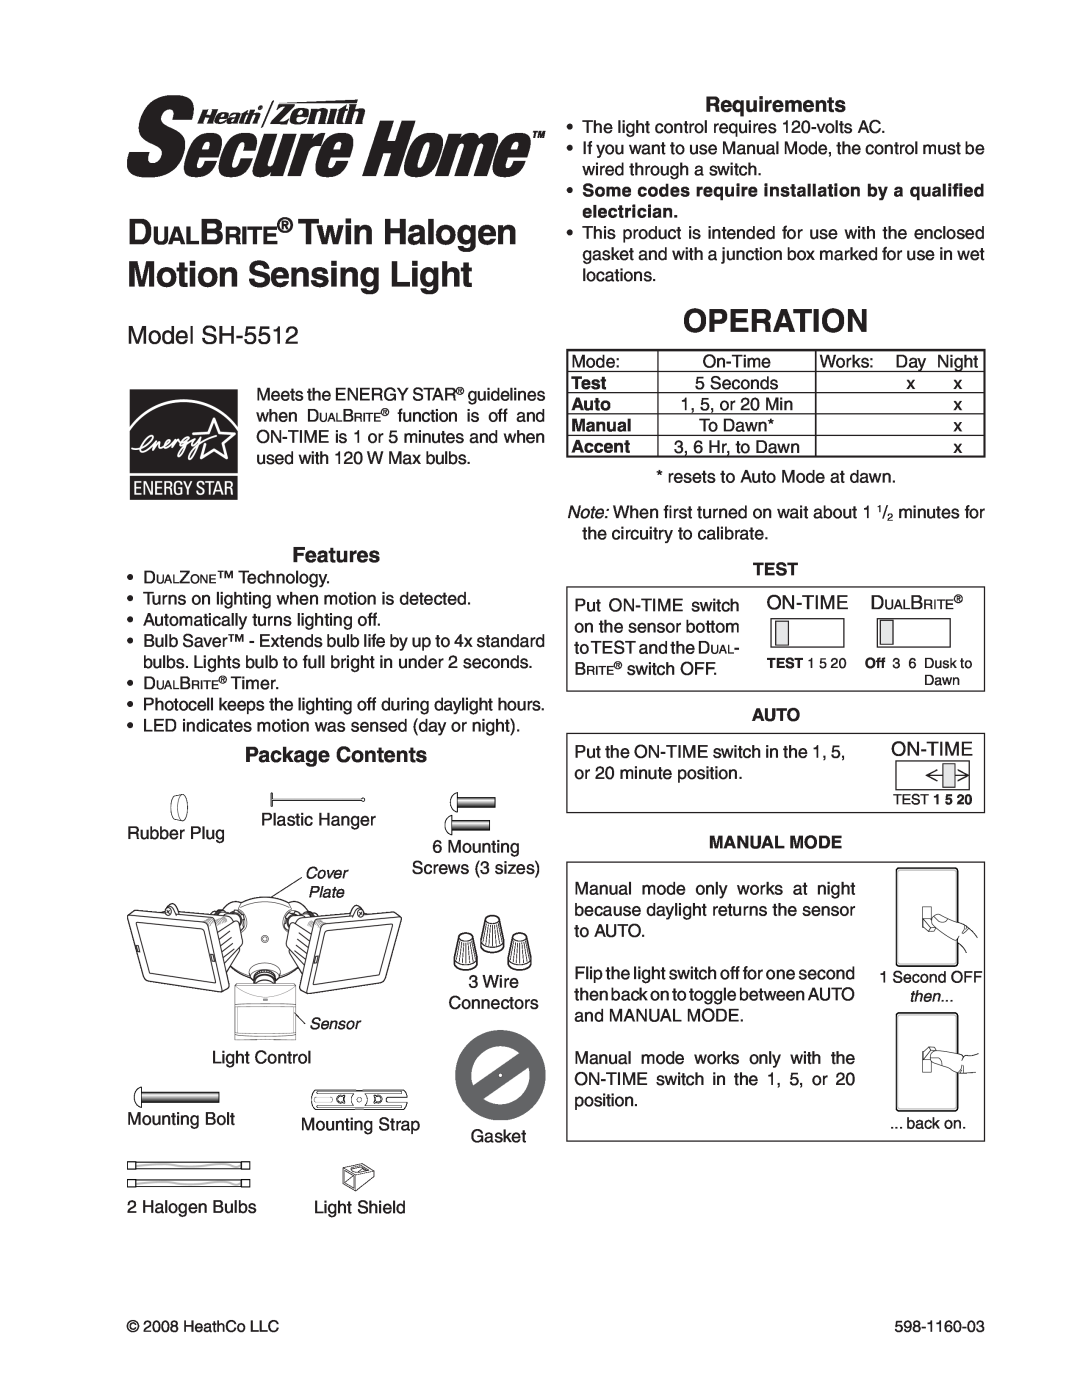 Heath Zenith manual DualBrite Twin Halogen Motion Sensing Light, Operation, Model SH-5512, On-Time, Test, Auto, Manual 